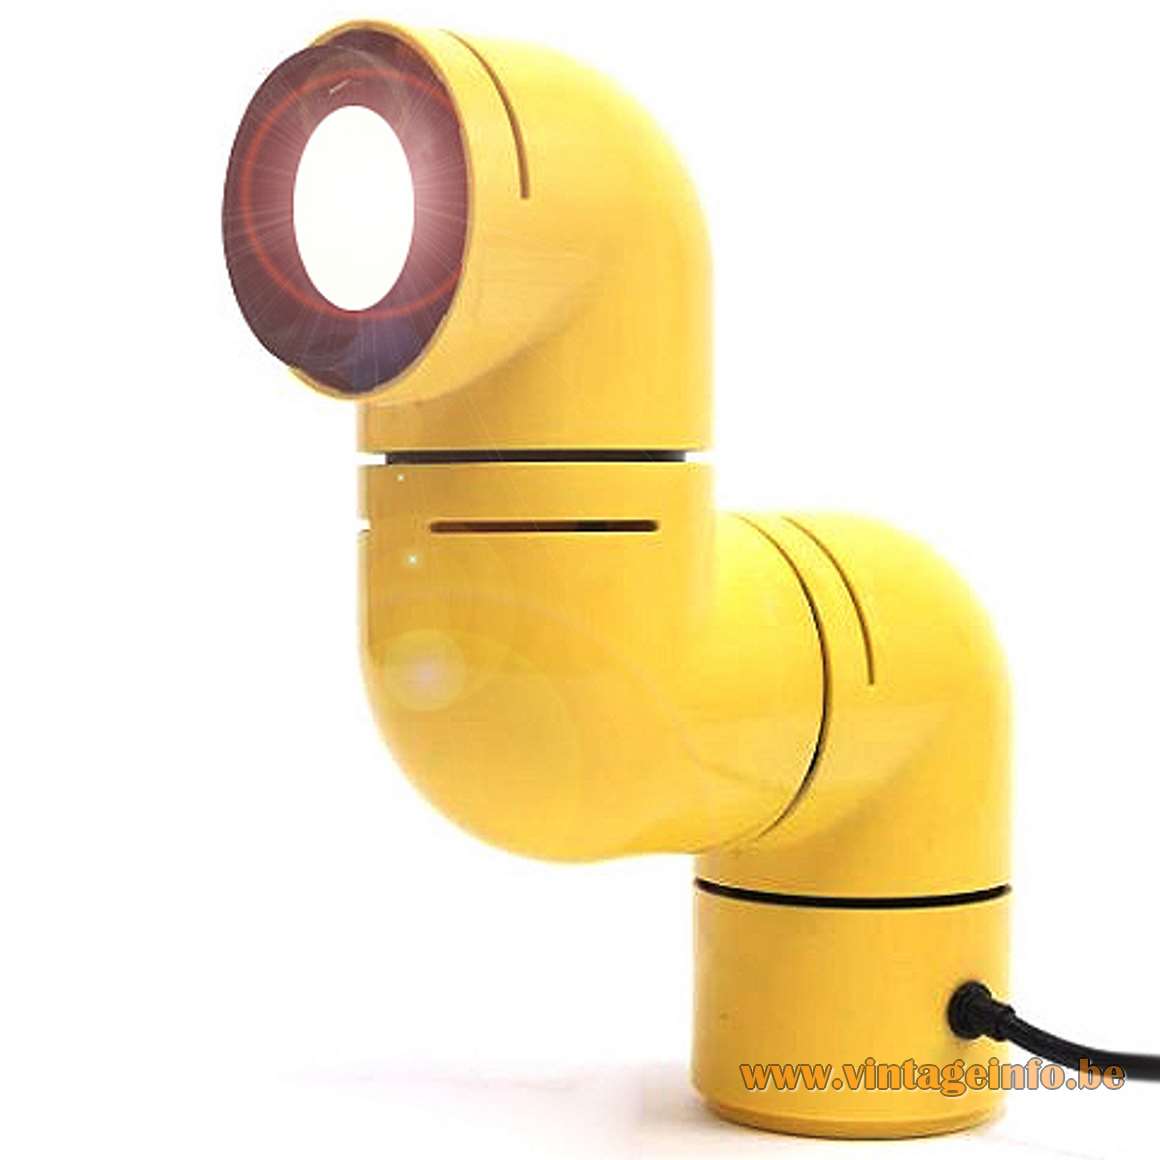 Metalarte Tatù table lamp 1972 design: André Ricard yellow plastic adjustable periscope caterpillar light